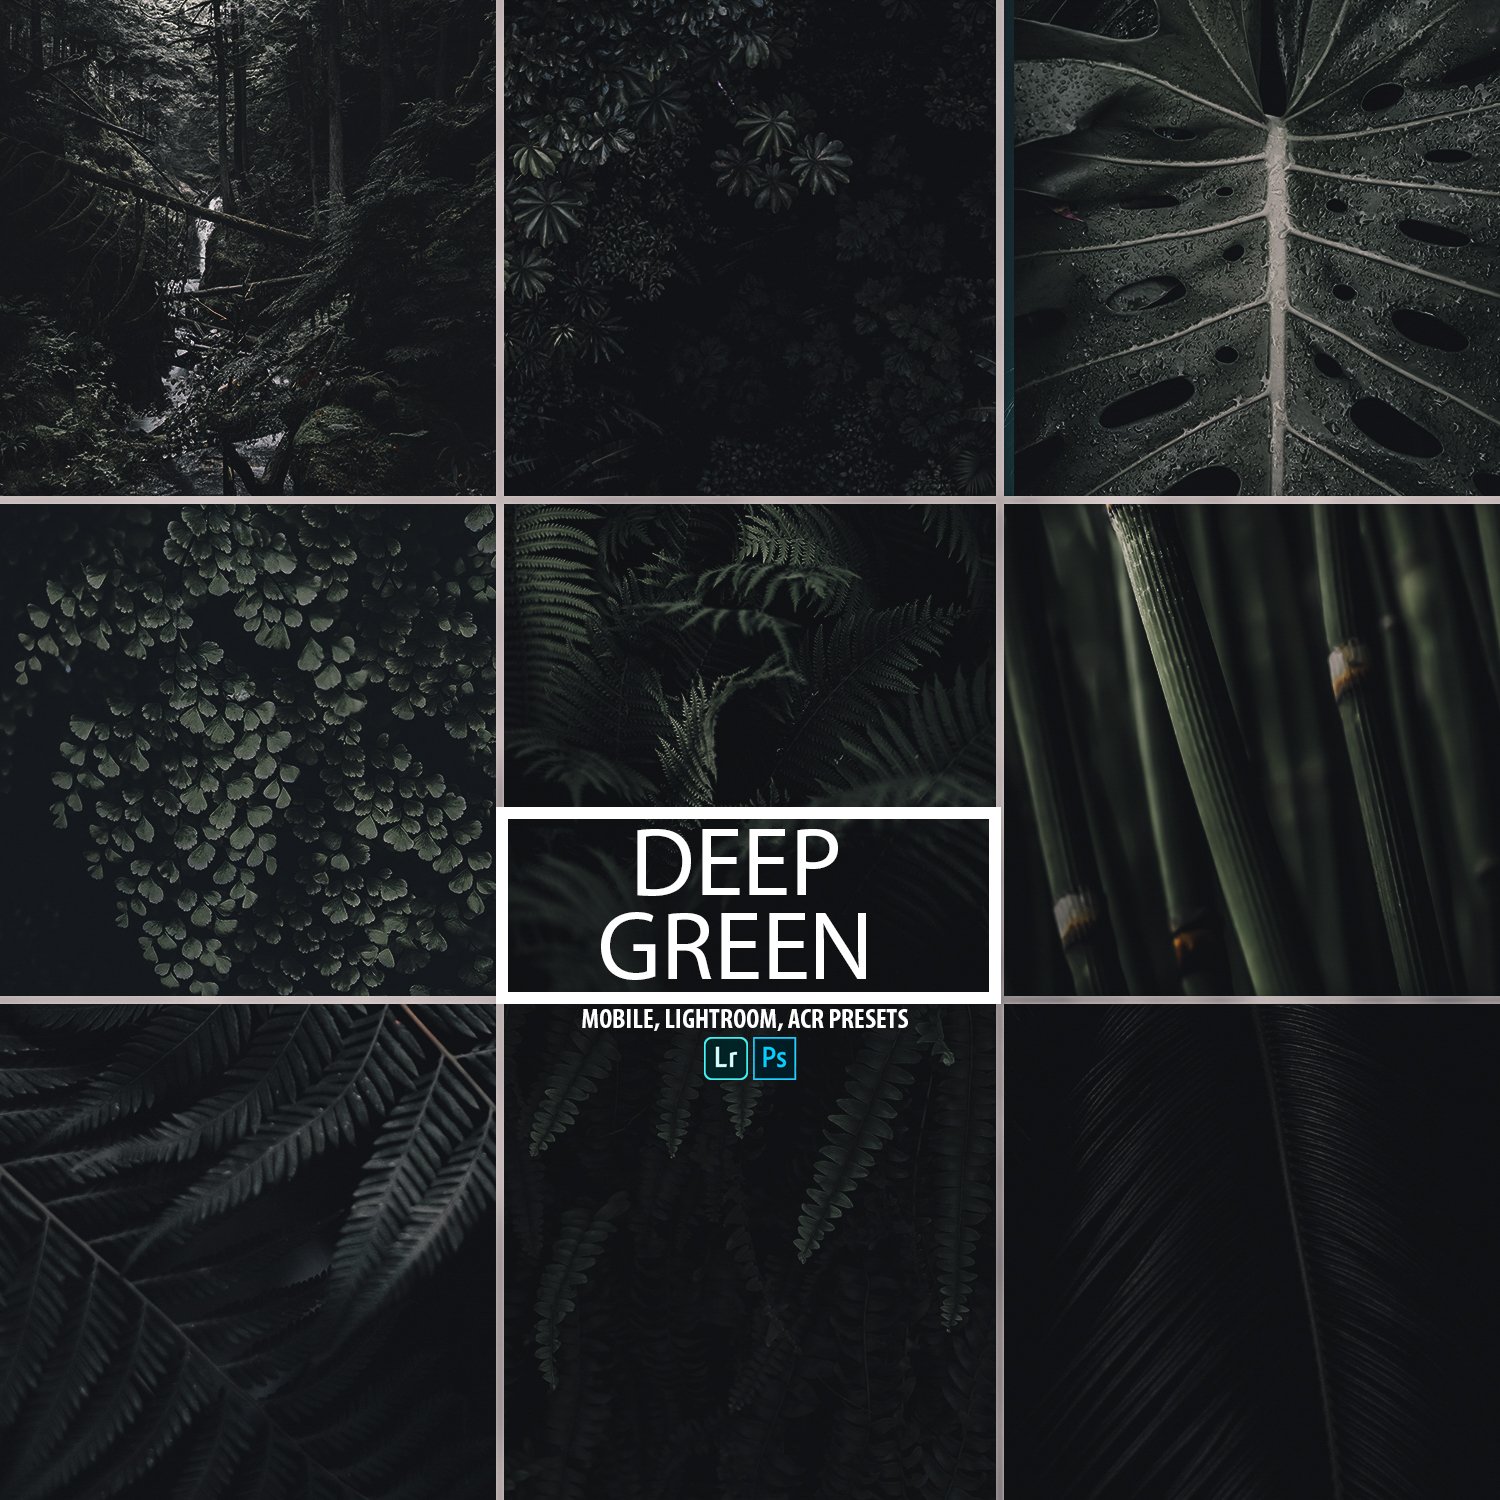 Deep Green Presetcover image.